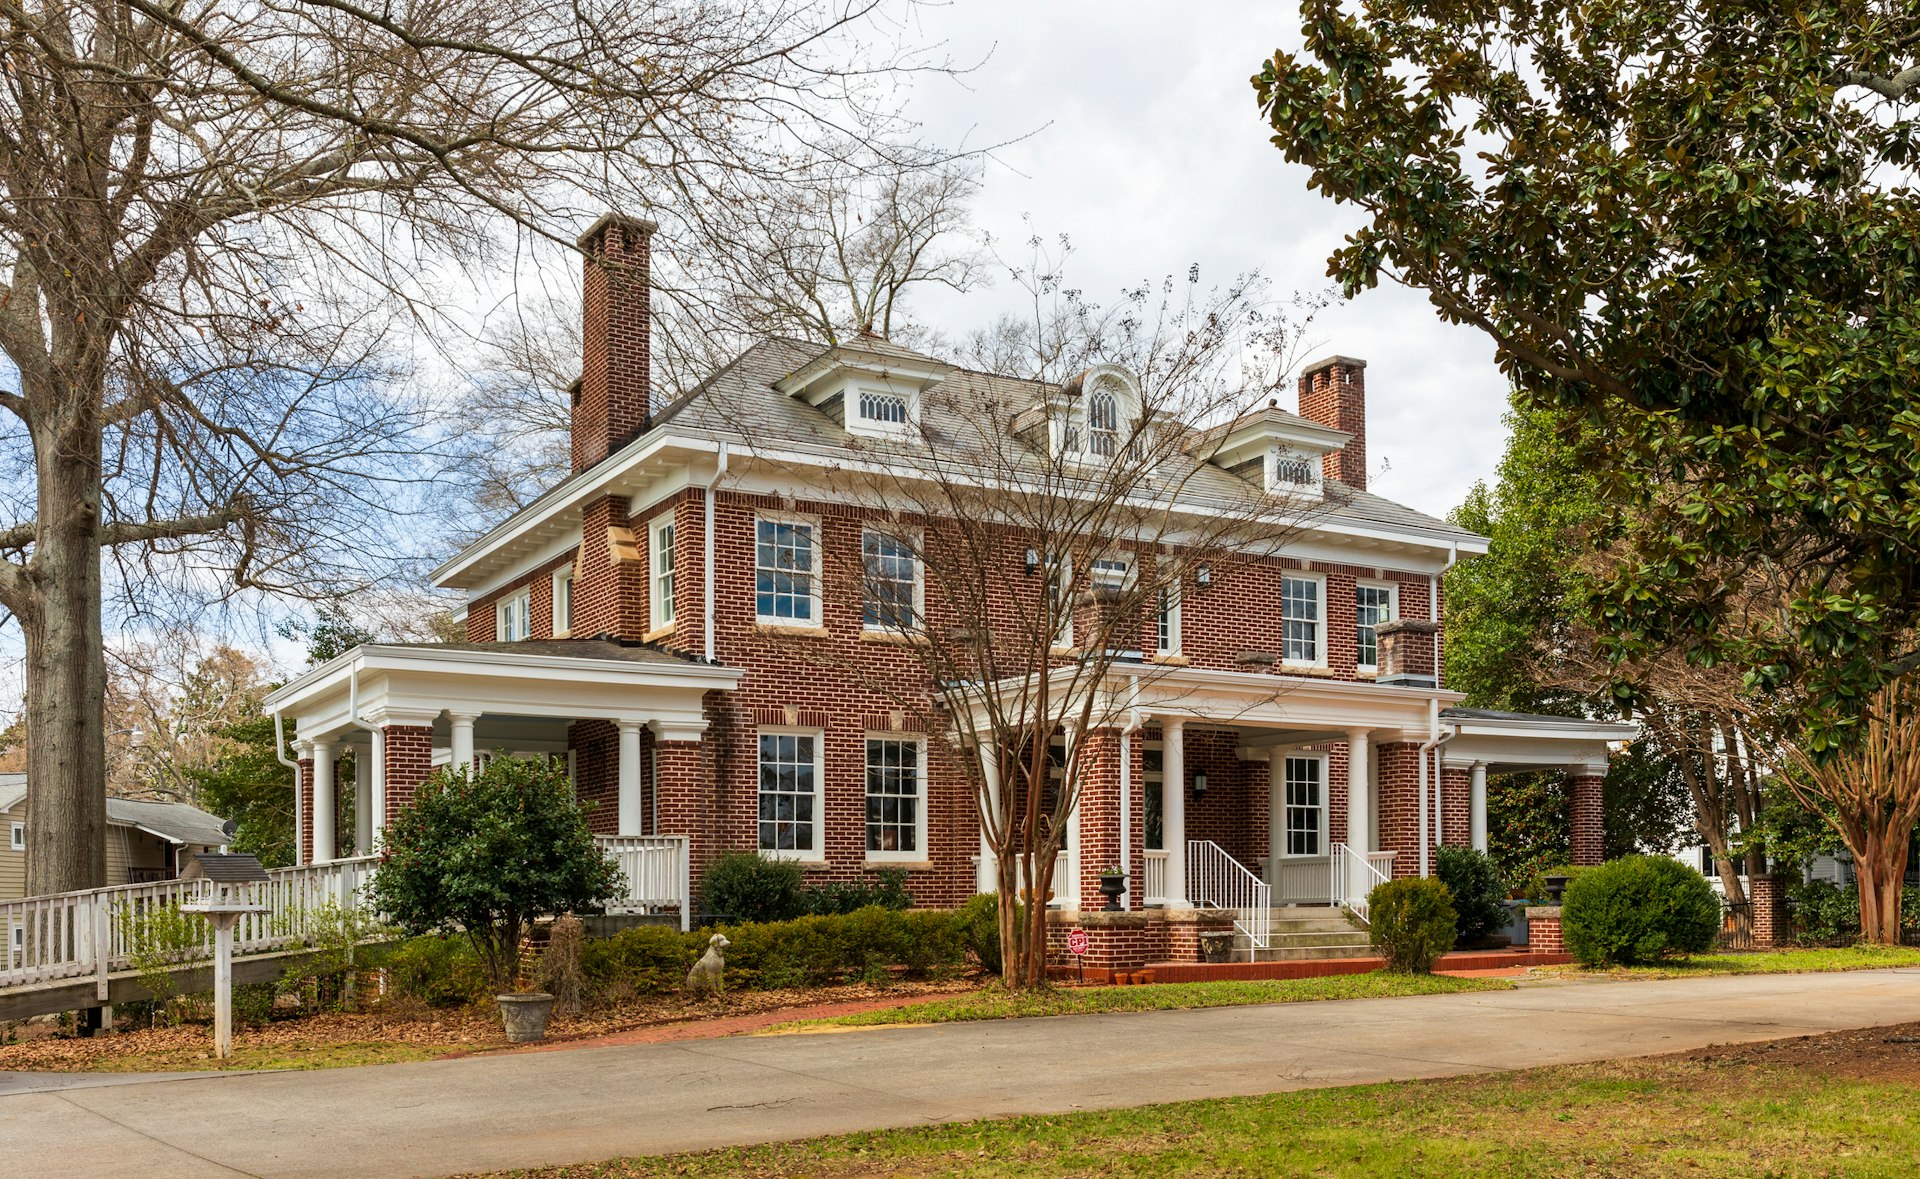 Exterior shot of an elegant home, Belmont, NC  USA